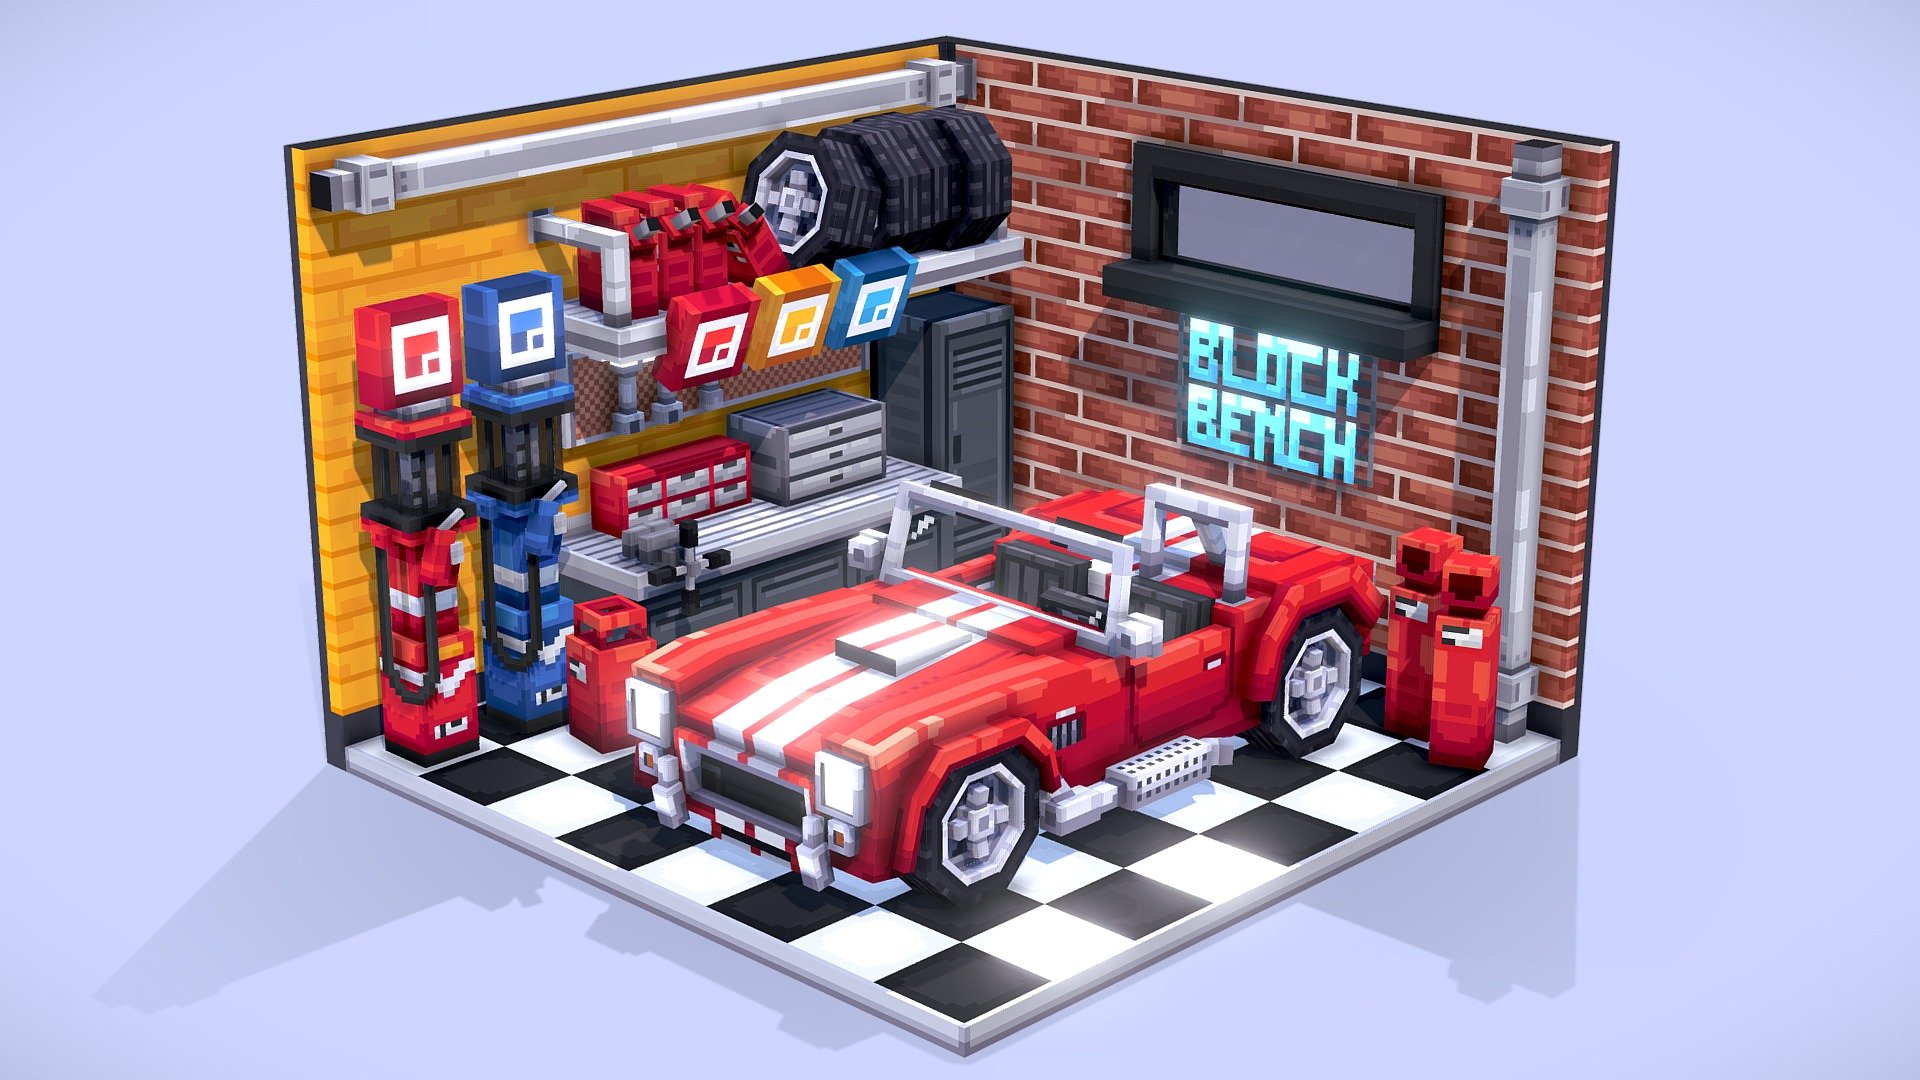 Retro Garage made with Blockbench 3d model